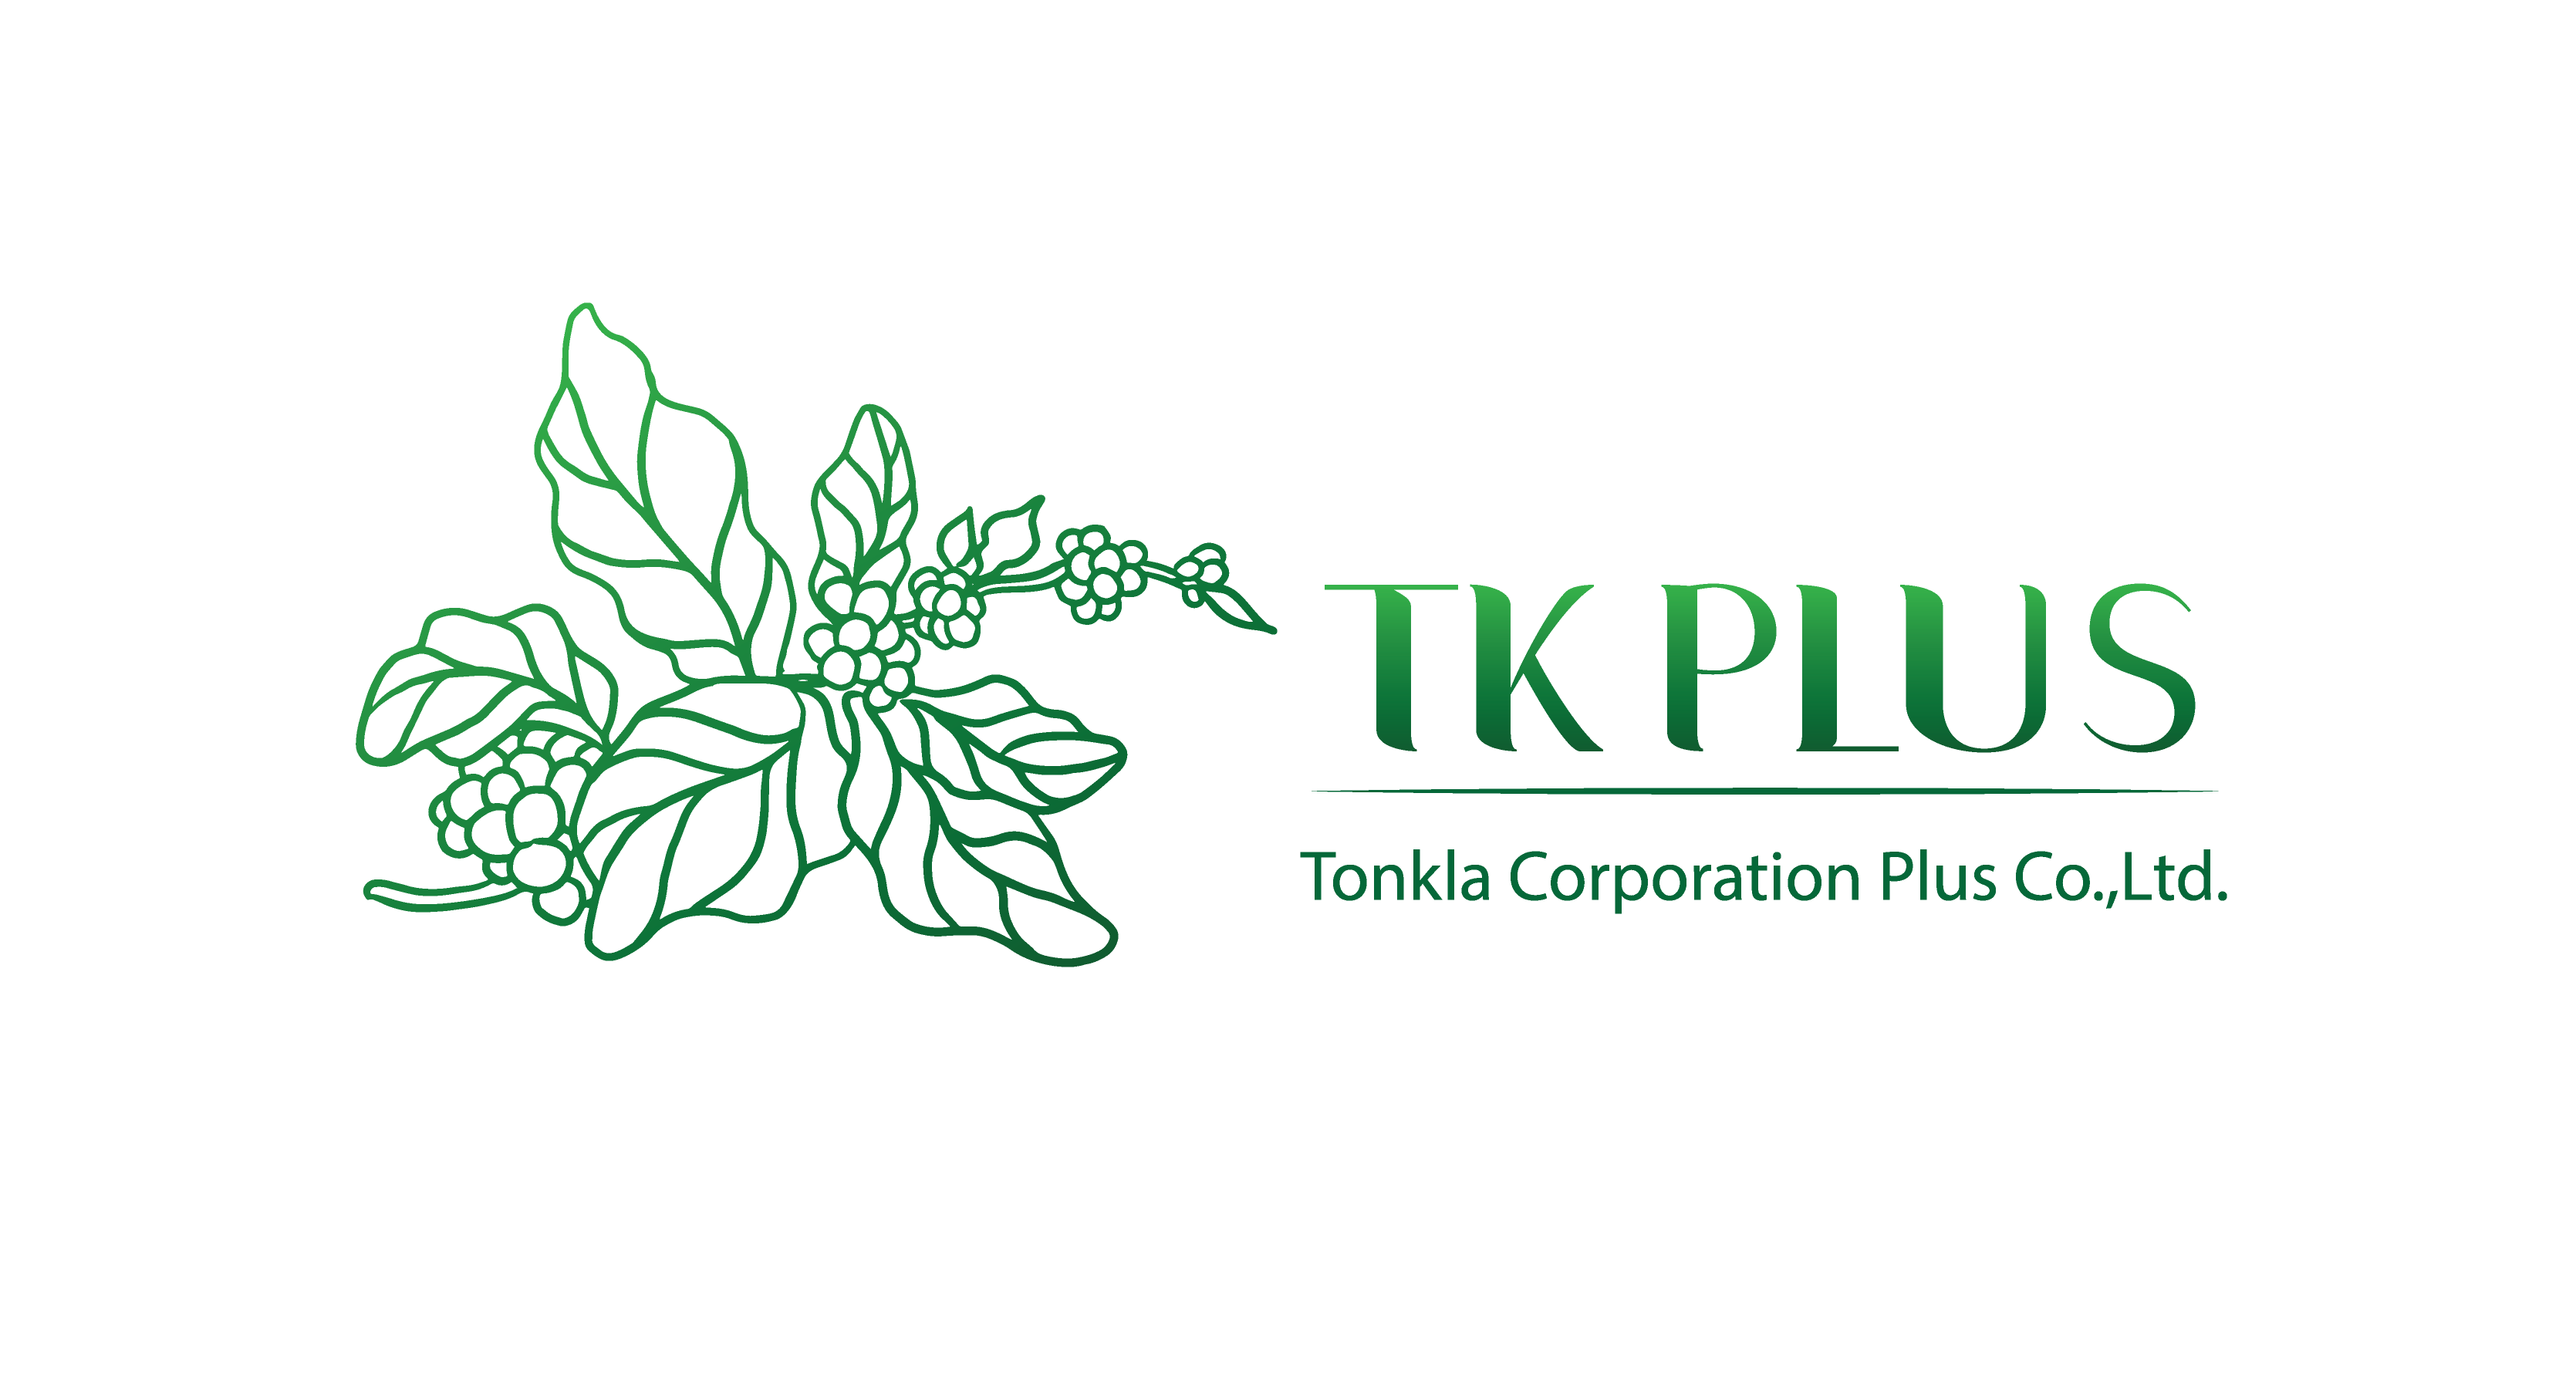 Tonkla Corporation Plus